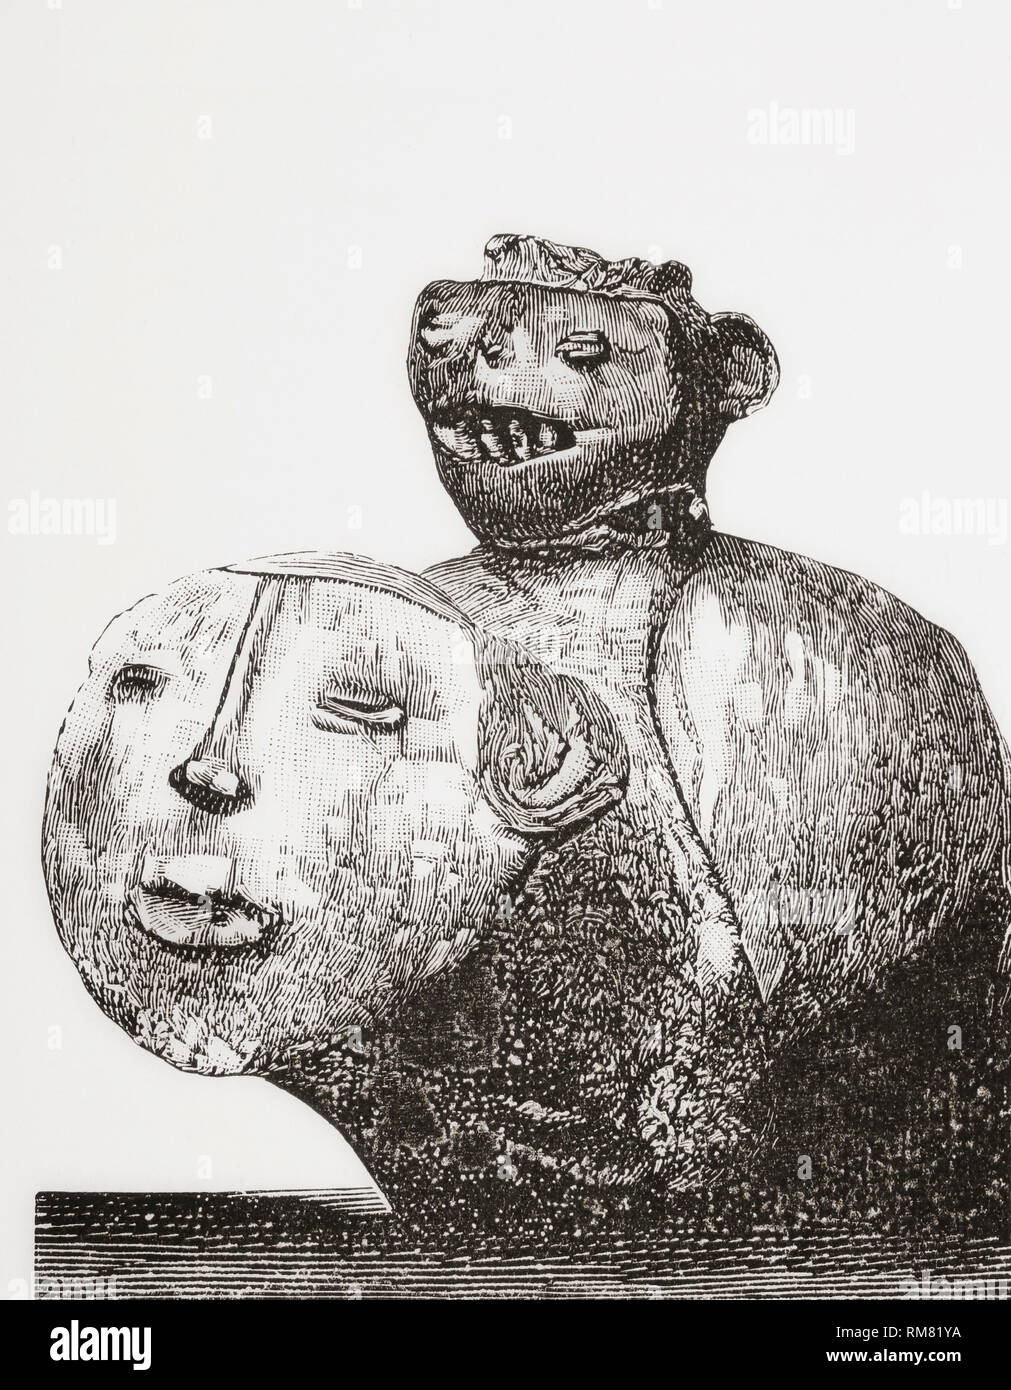 Ceramic figure of a quadruped with two human heads from Soacha, Cundinamarca, Bogota, Columbia.  From La Ilustracion Artistica, published 1887. Stock Photo